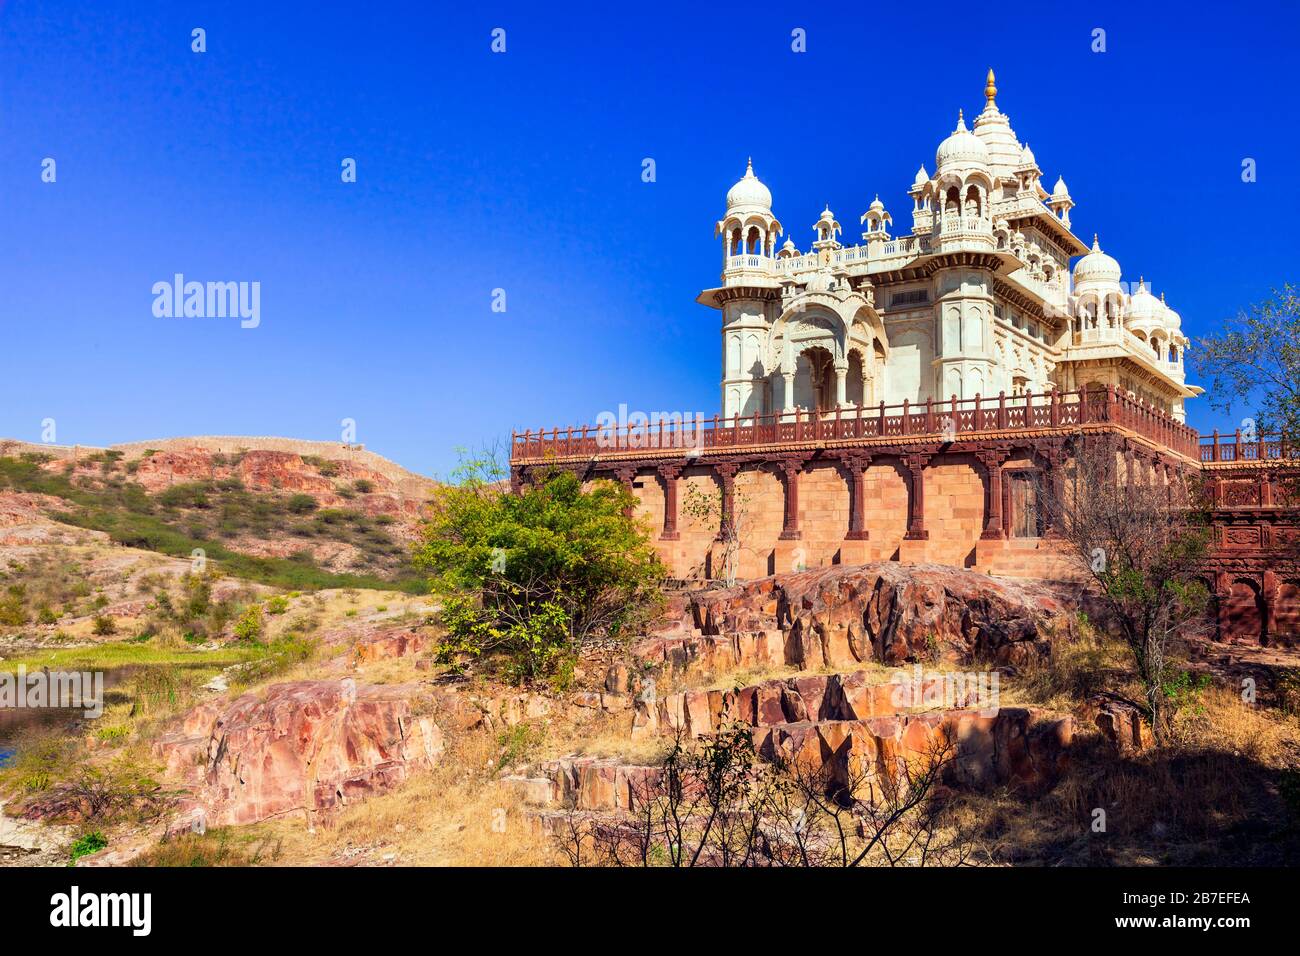 Landmarks of India,old masoleum in Jodhpur.Rajasthan. Stock Photo